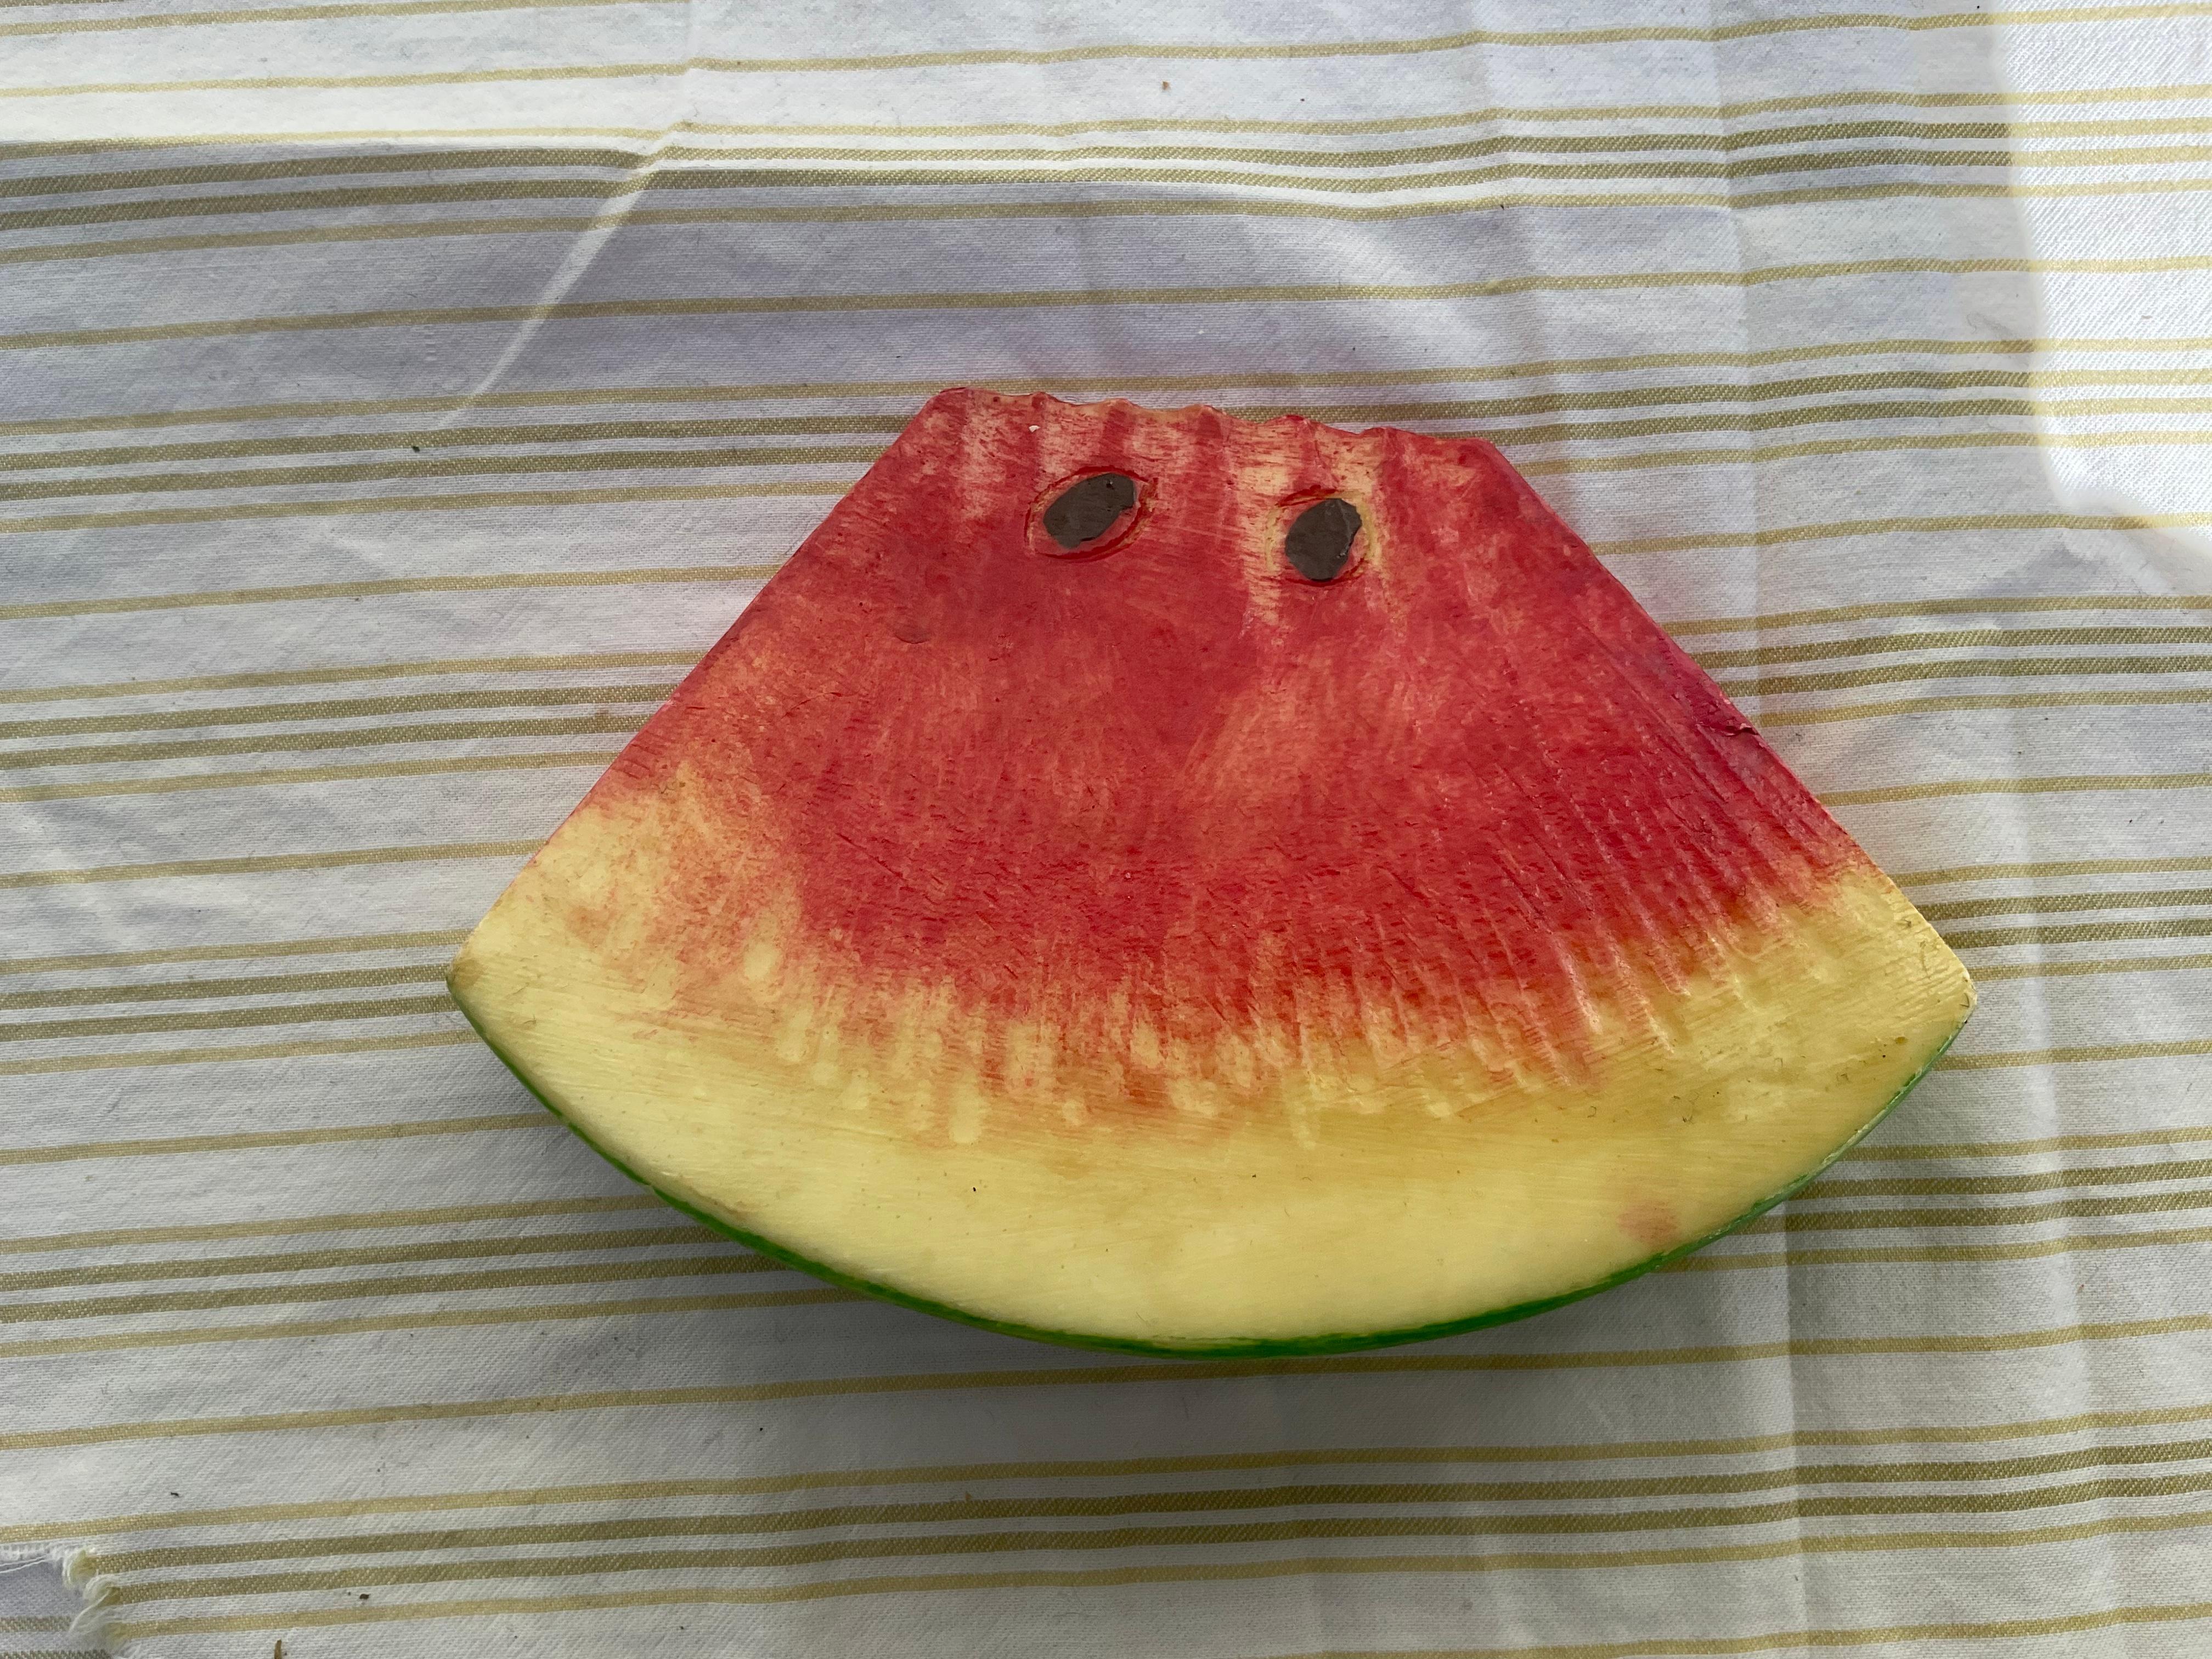 1960s Italian Stone Fruit, Watermelon Slices, 3 5